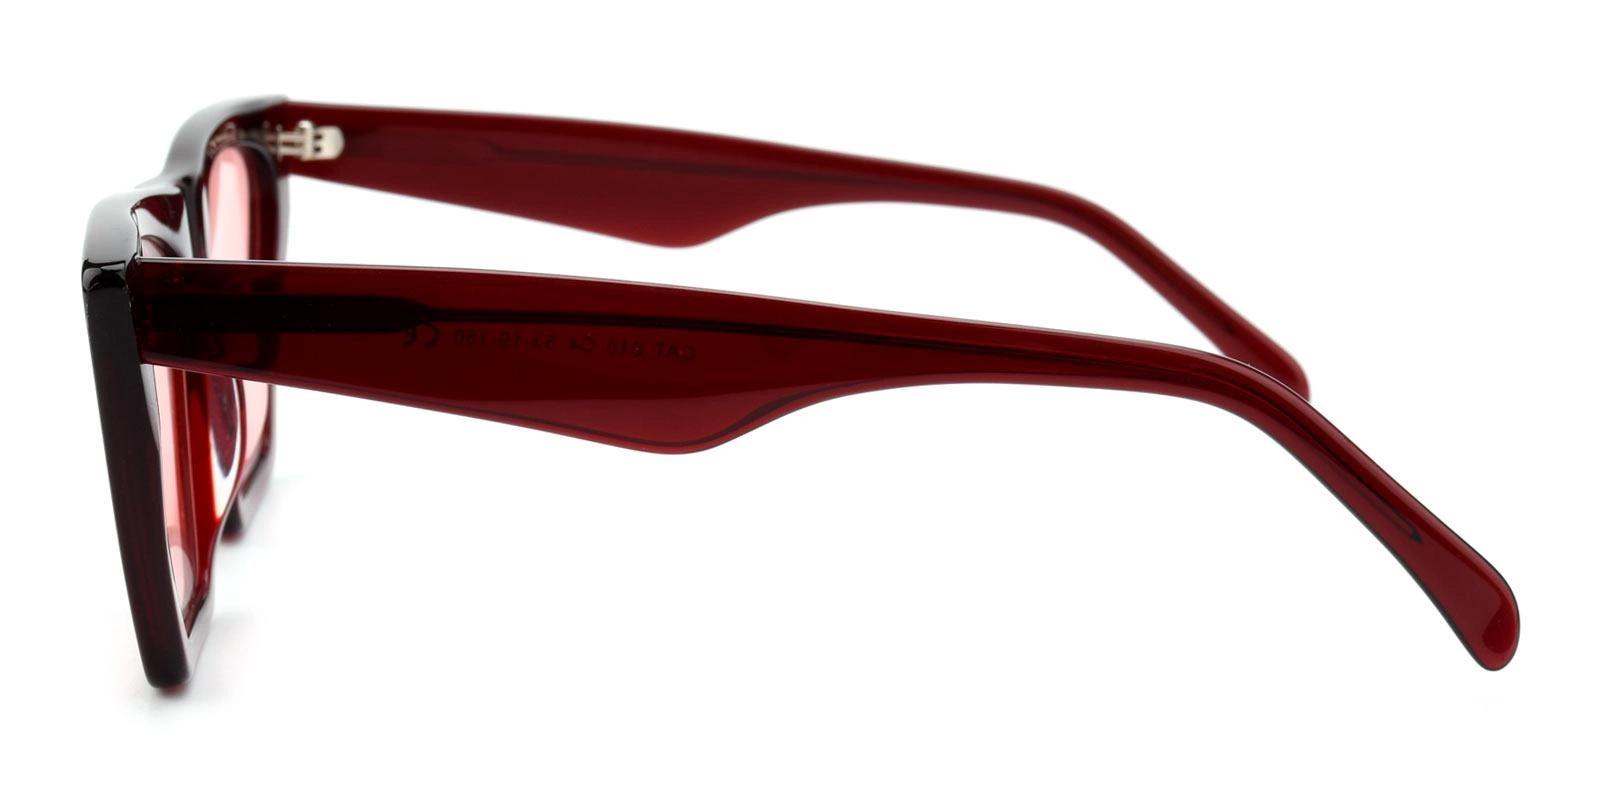 Upature Red Acetate Sunglasses , UniversalBridgeFit Frames from ABBE Glasses